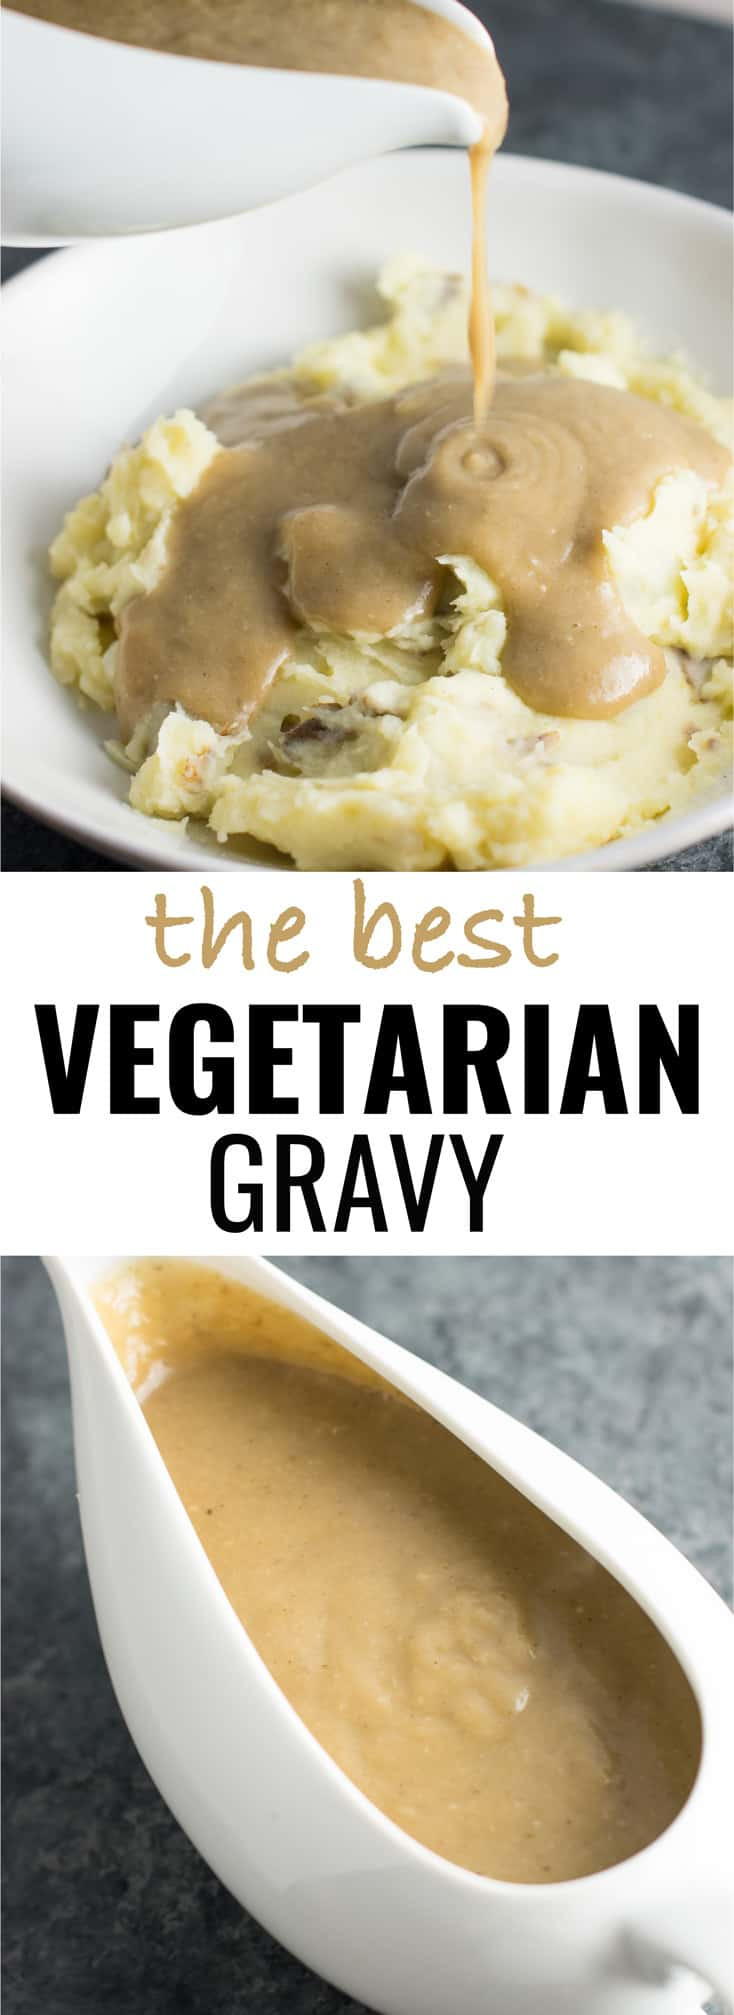 Mushroom Gravy Vegetarian
 The Best Ve arian Gravy Recipe Build Your Bite